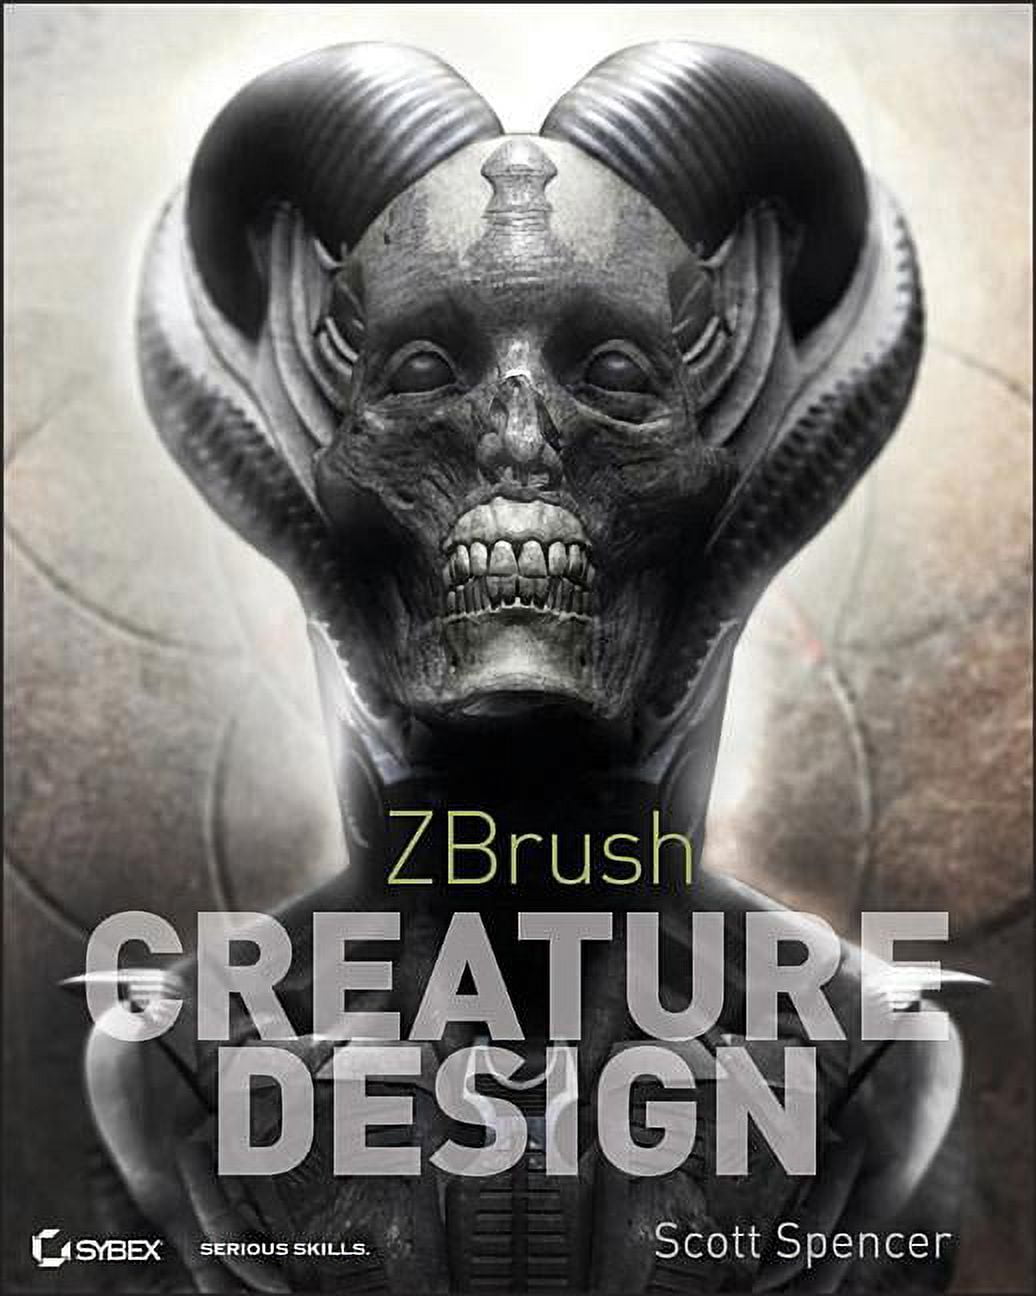 Creature concept I created